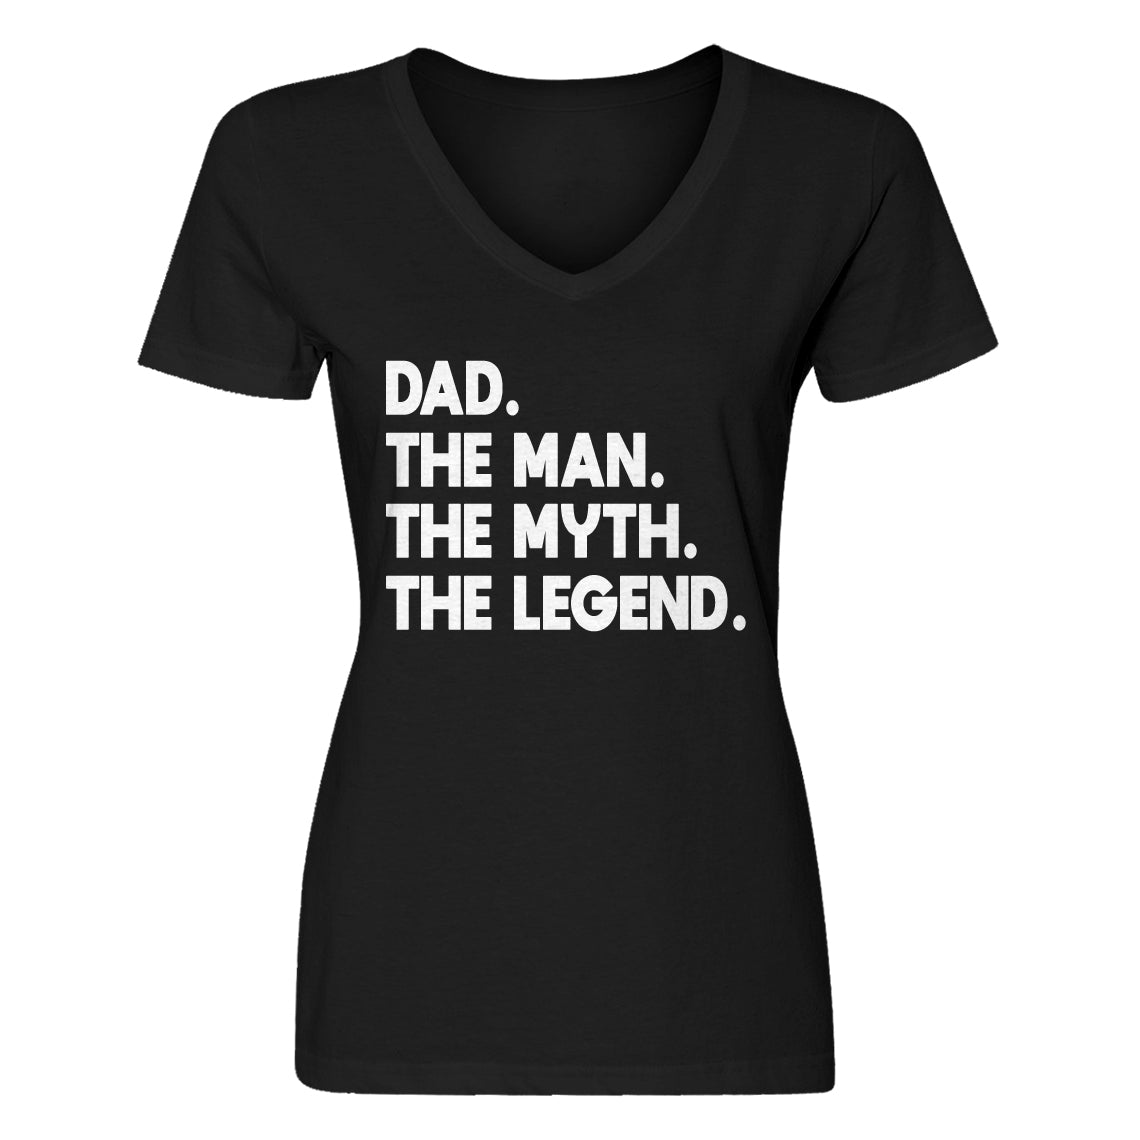 Womens Dad. The Man the Myth the Legend V-Neck T-shirt